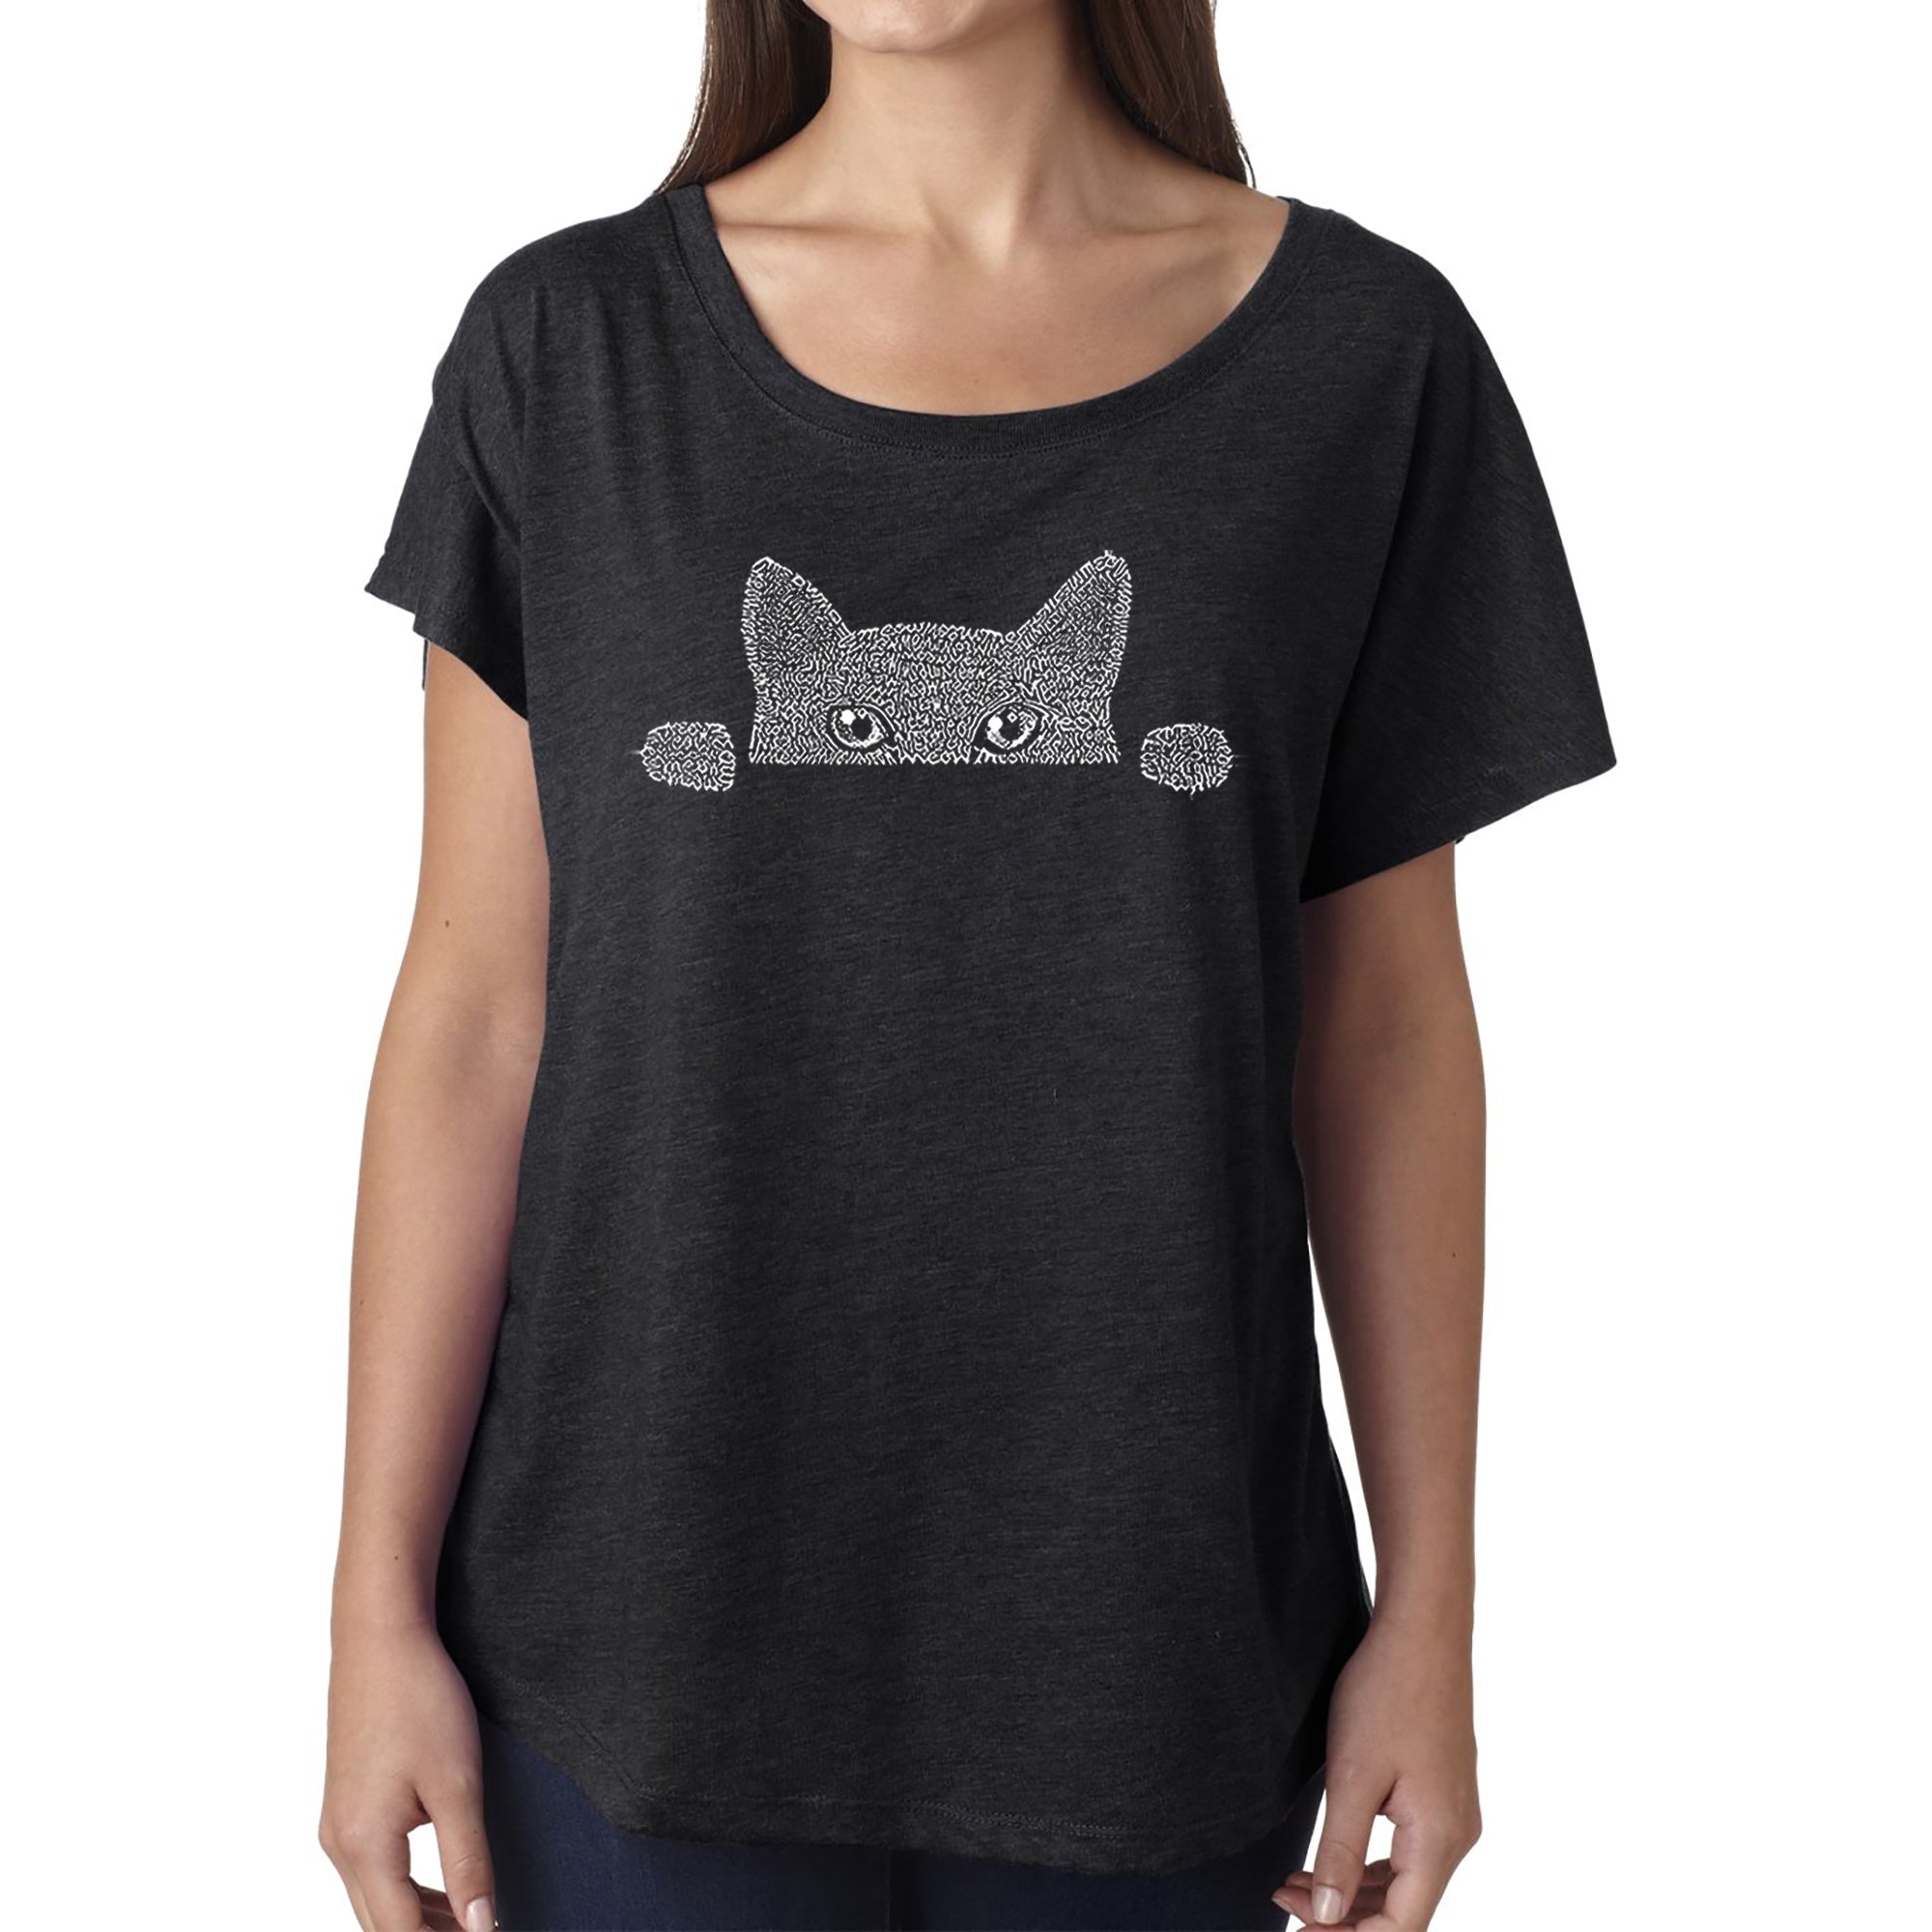 Peeking Cat - Women's Loose Fit Dolman Cut Word Art Shirt - Black - X-Large